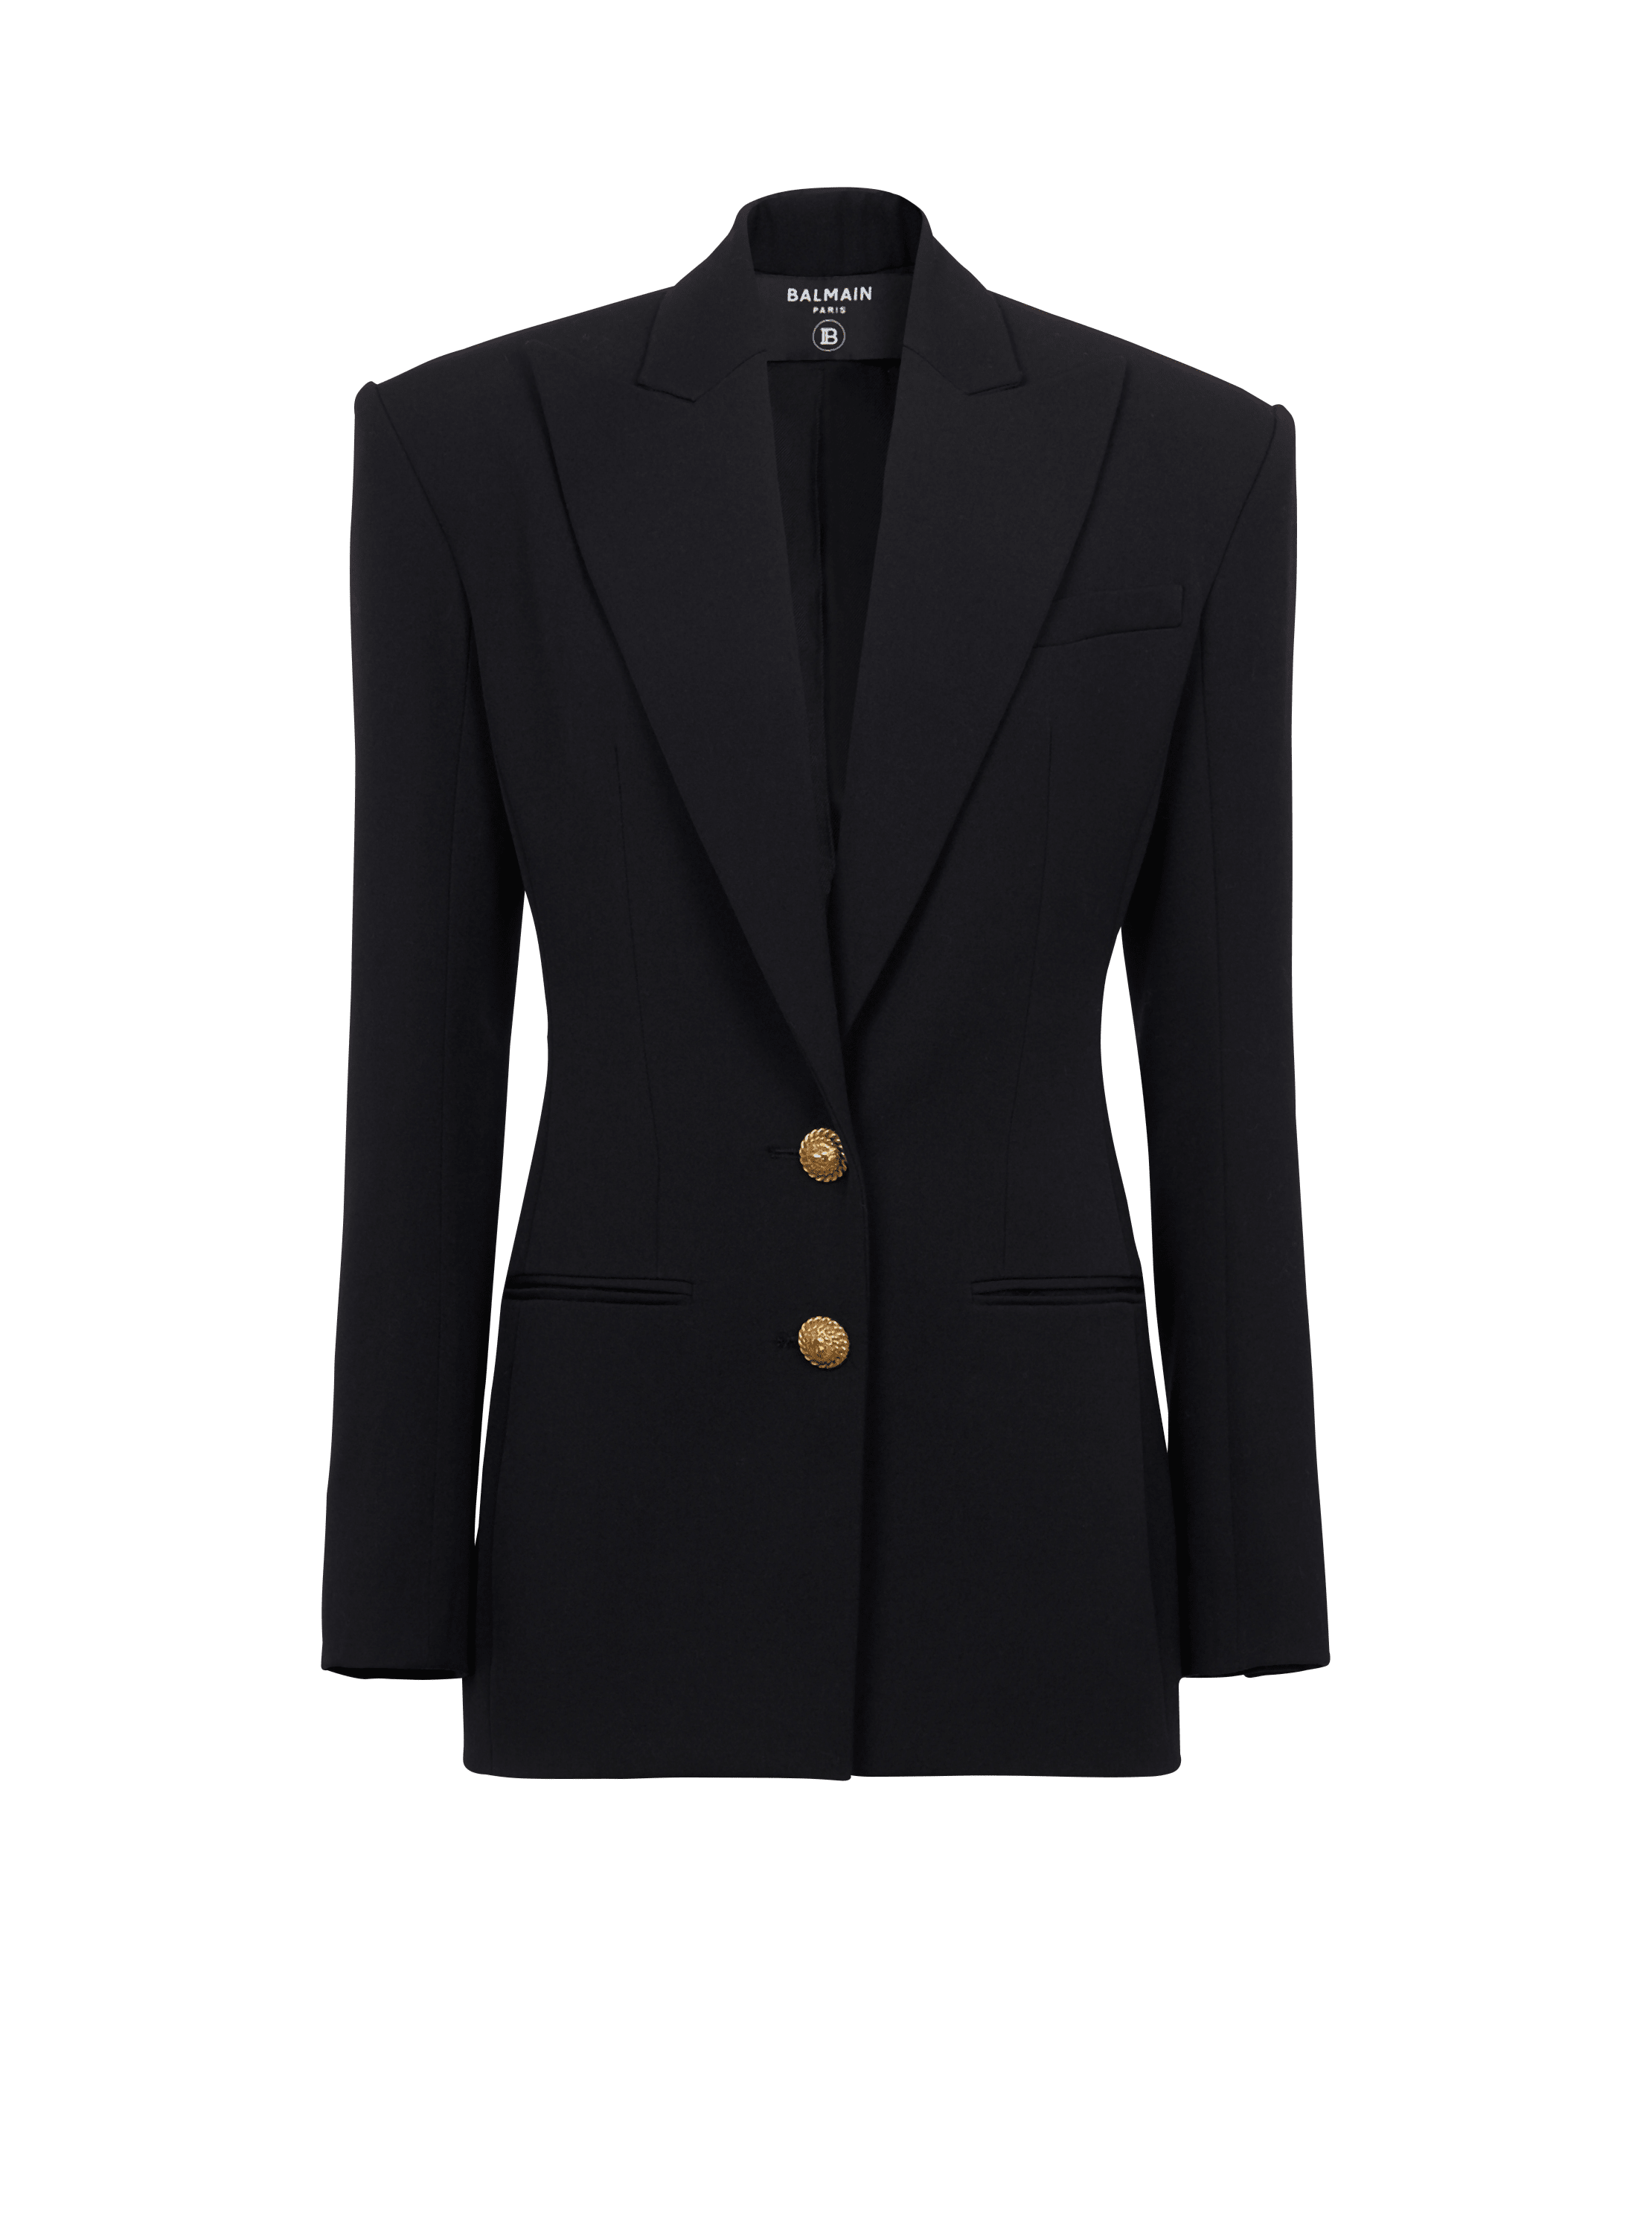 2-button cinched-waist jacket, black, hi-res